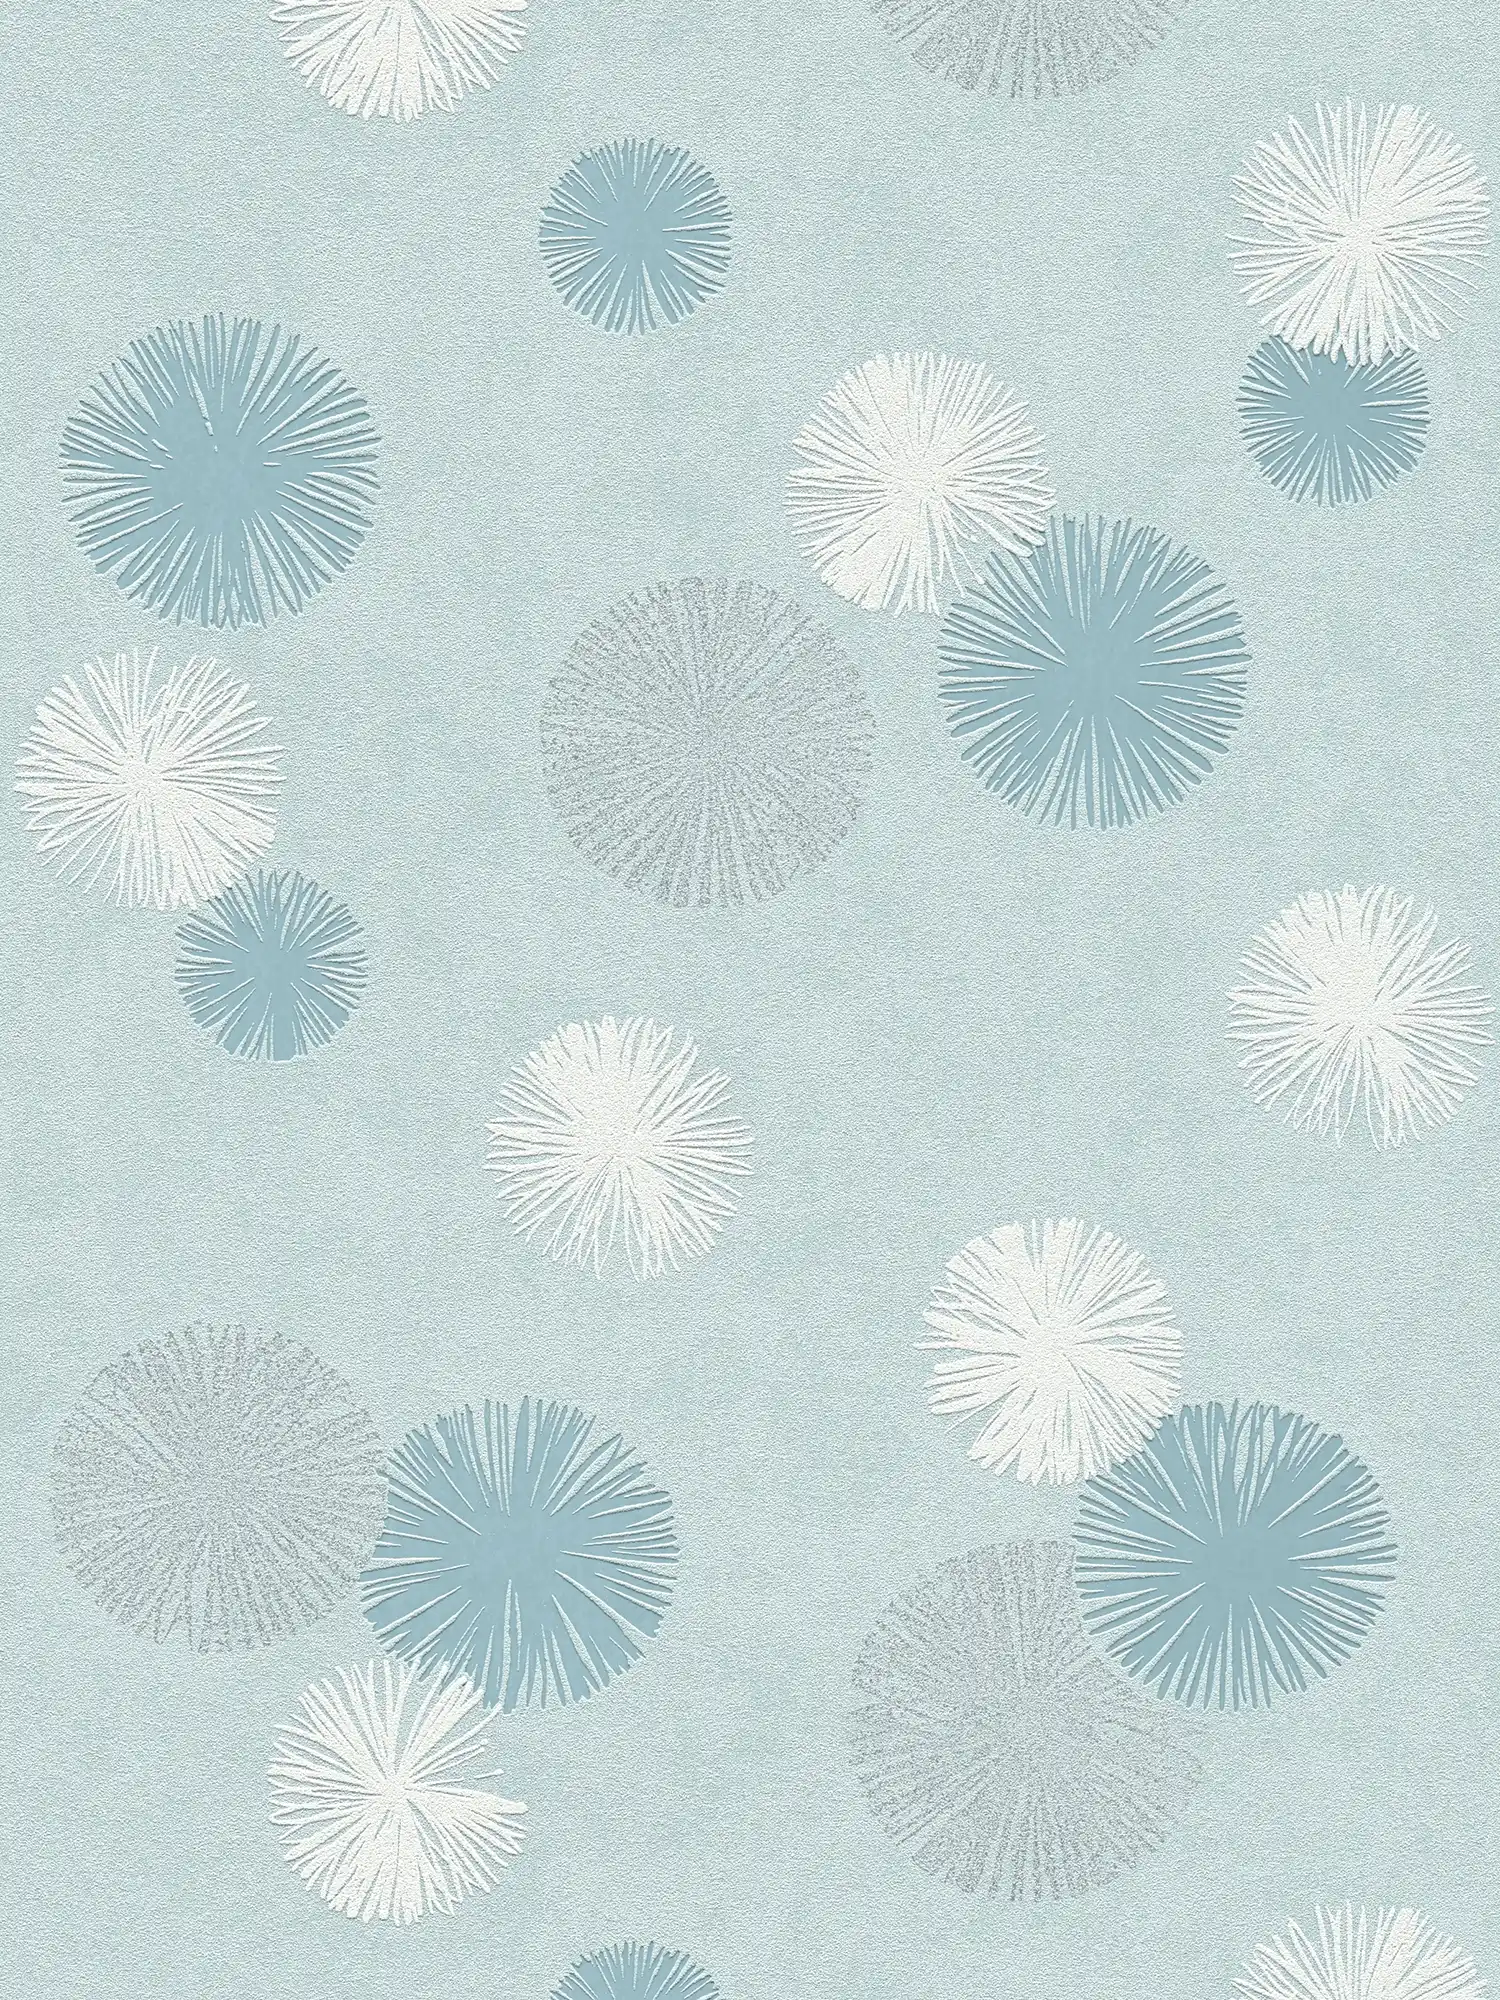 Mintgrüne Vliestapete mit modernem Design – Blau
